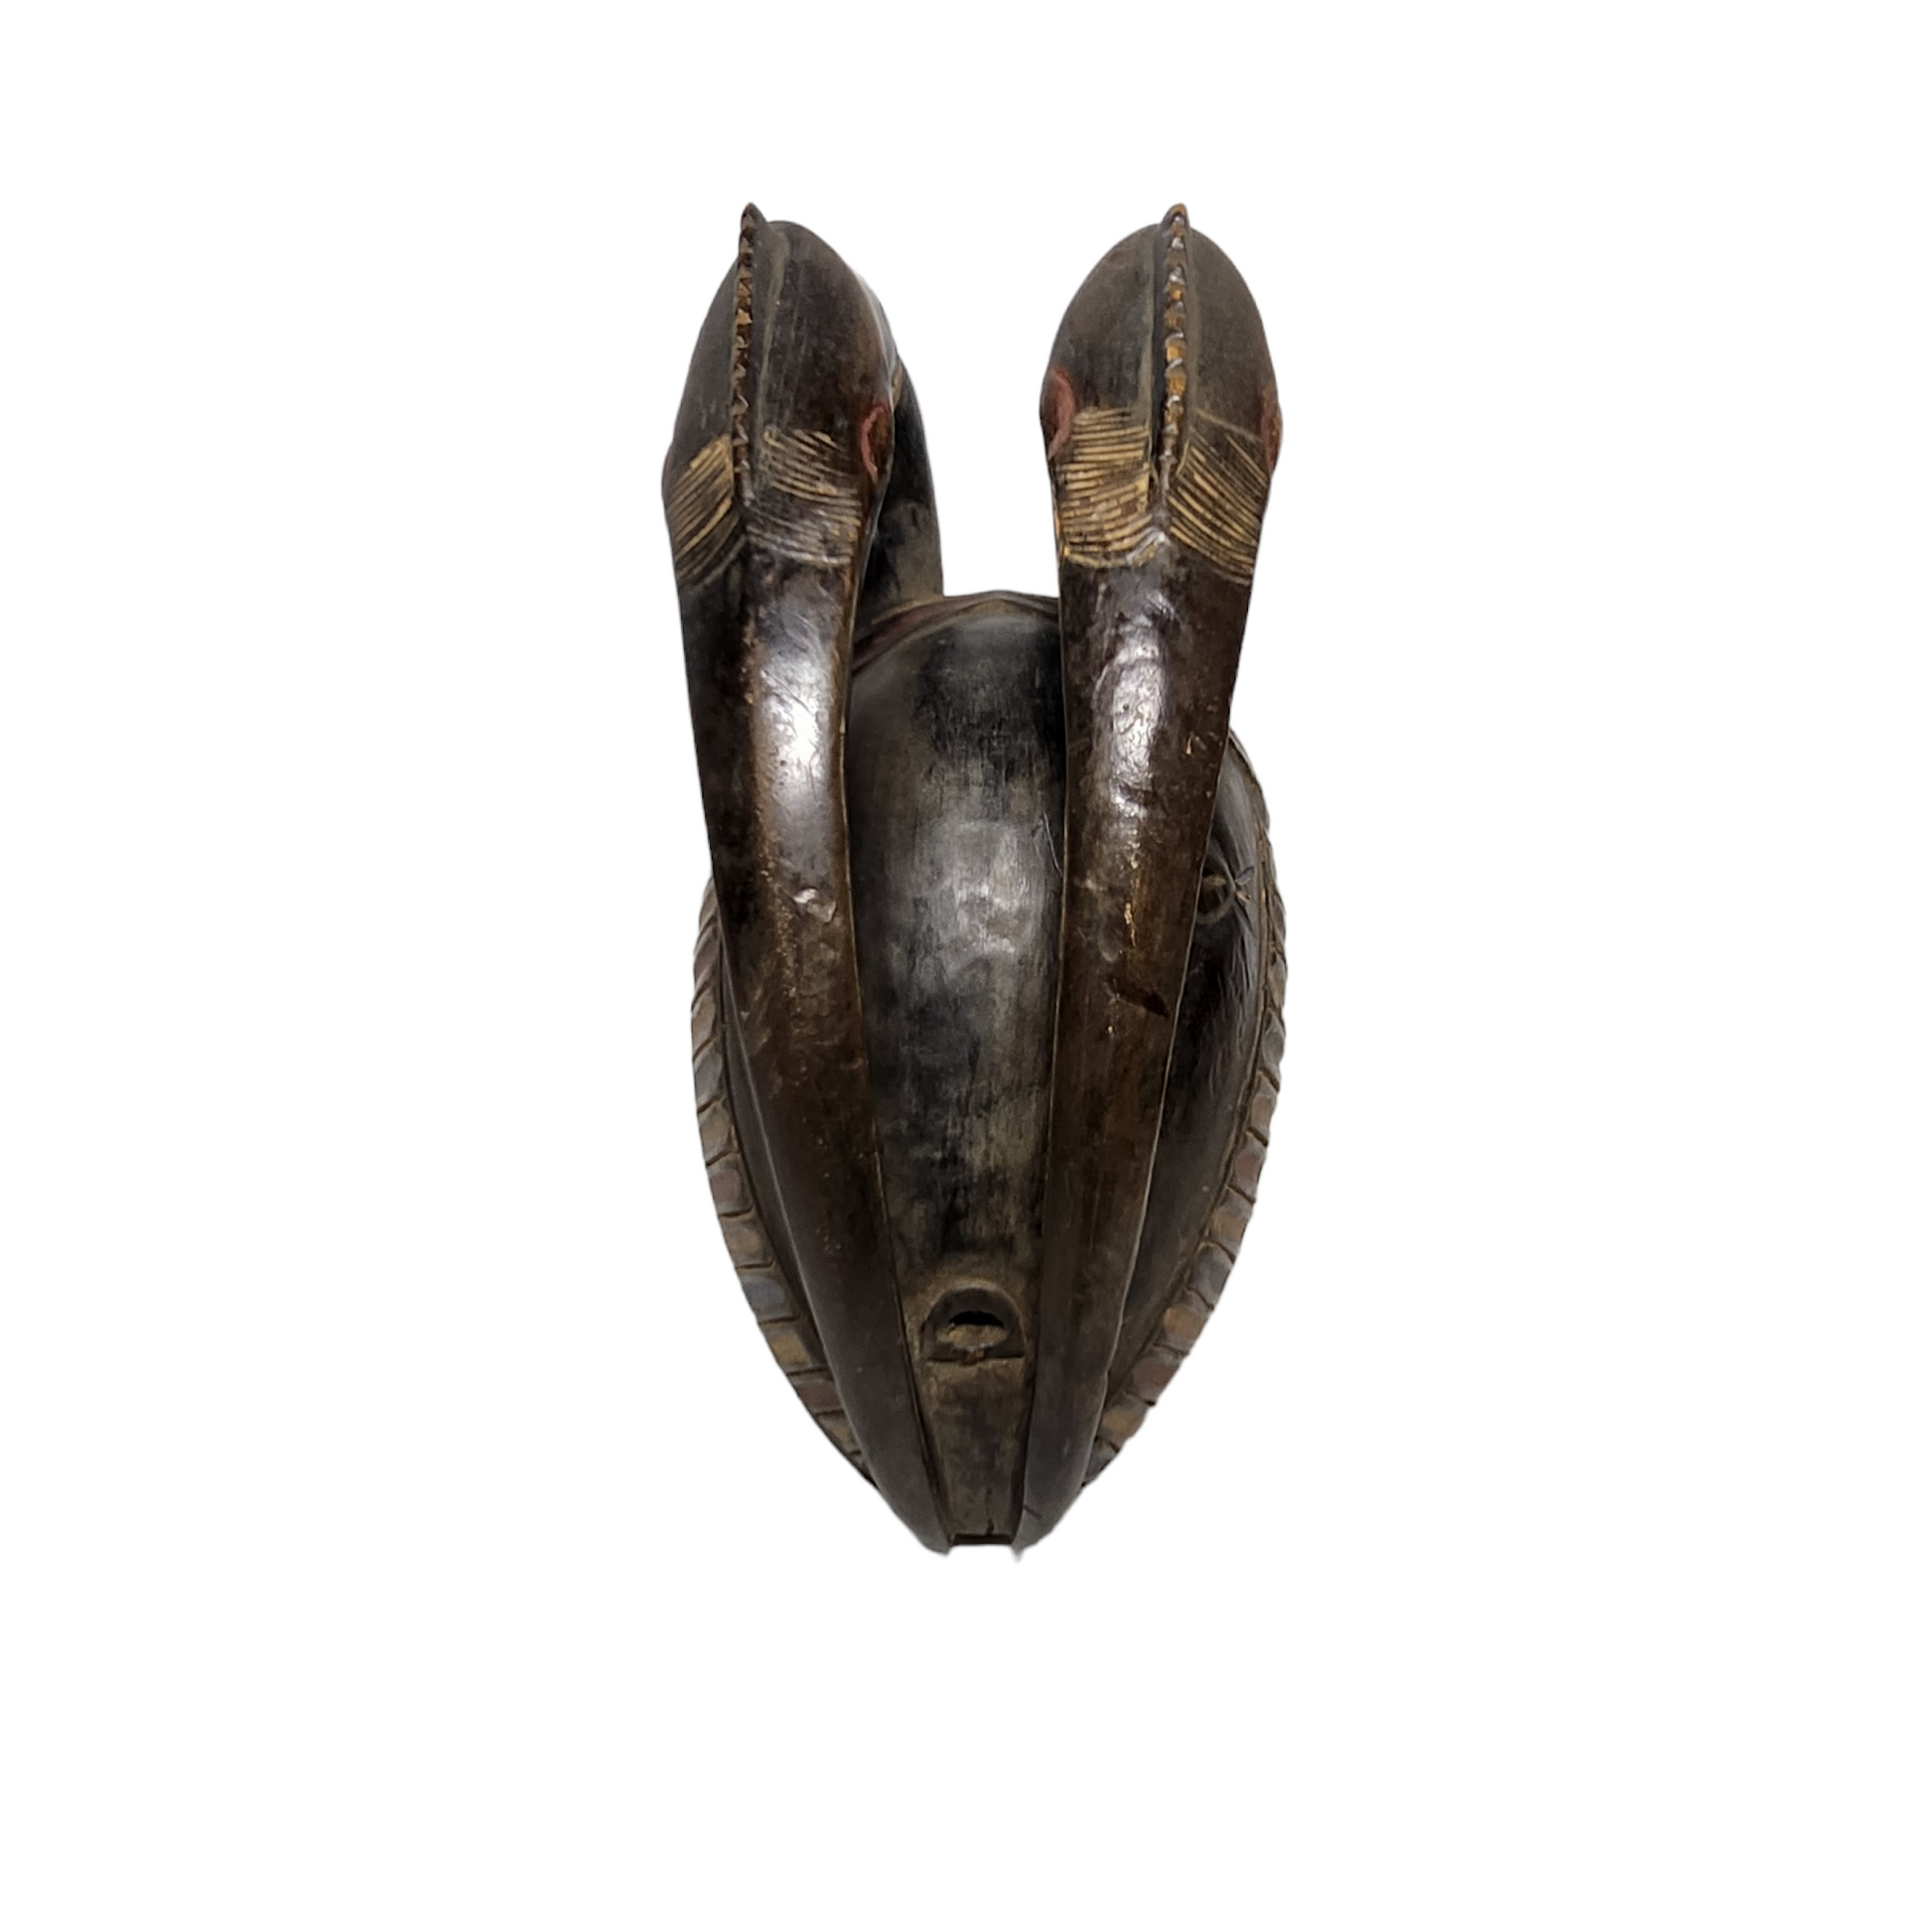 Koulango Mask from Ivory Coast (20th Century) - MD African Art